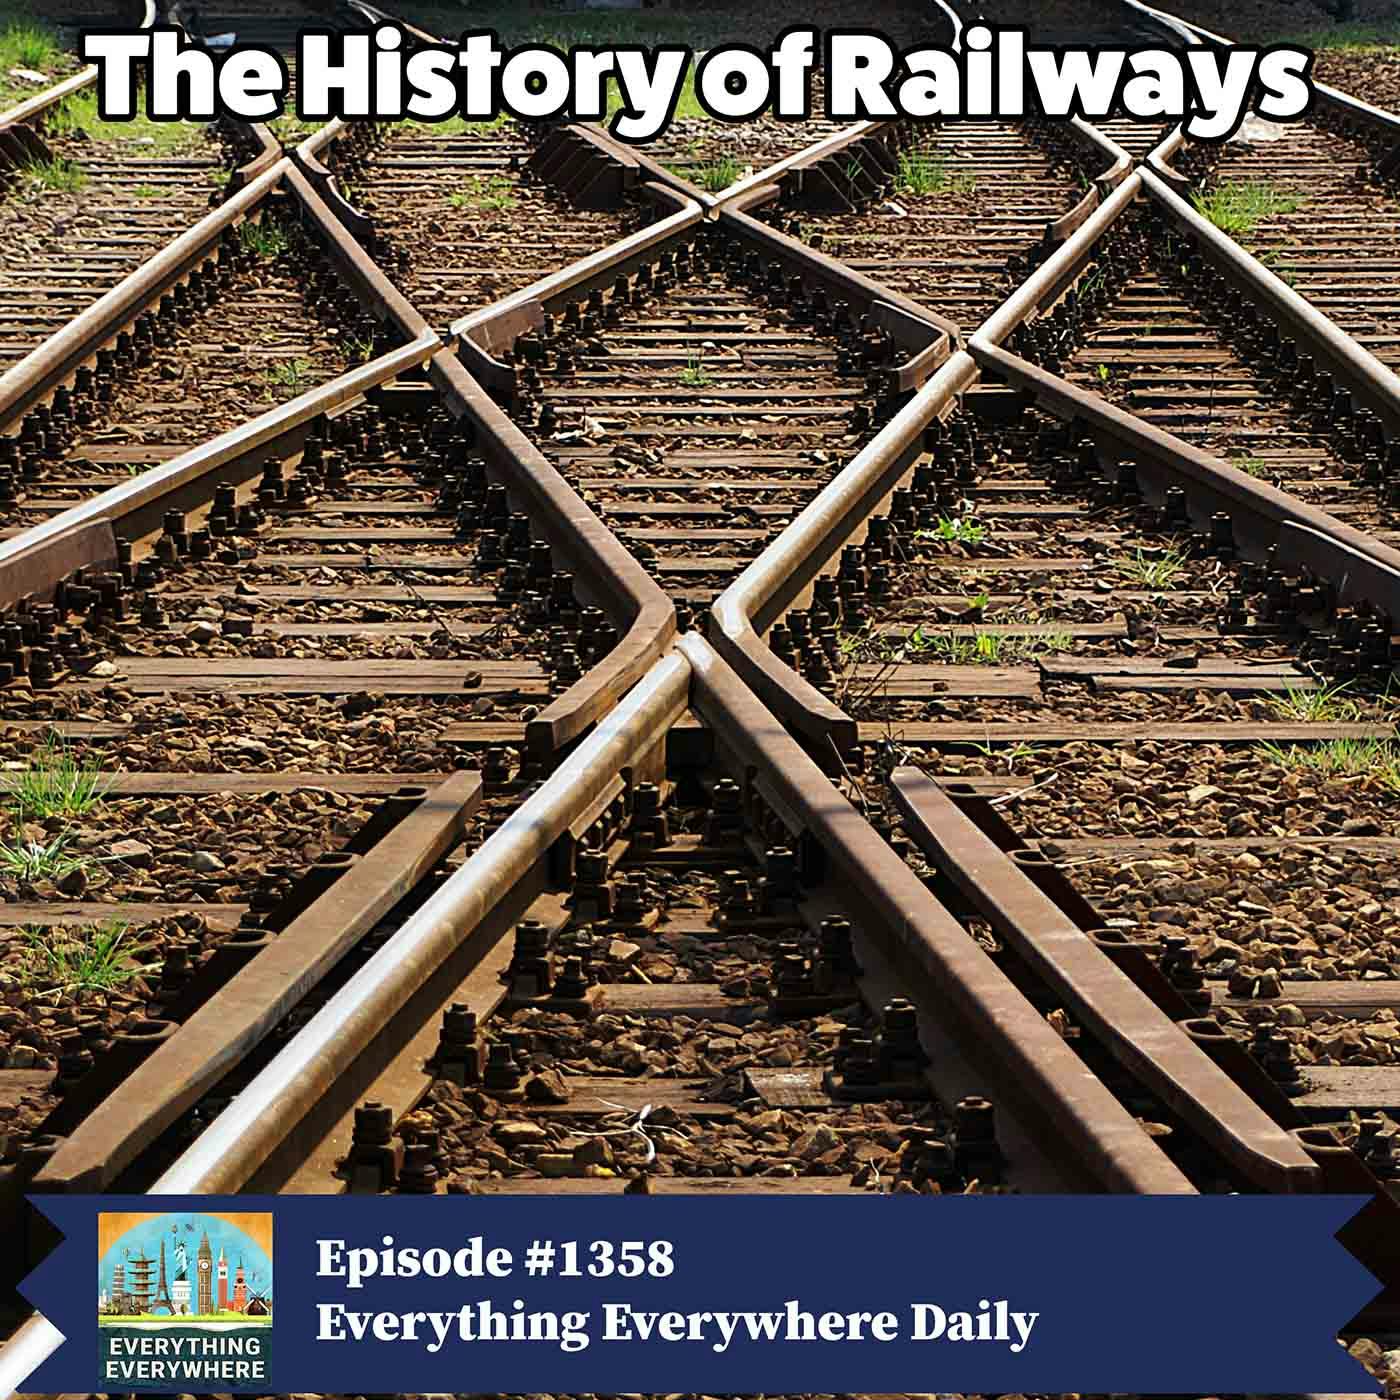 The History of Railways